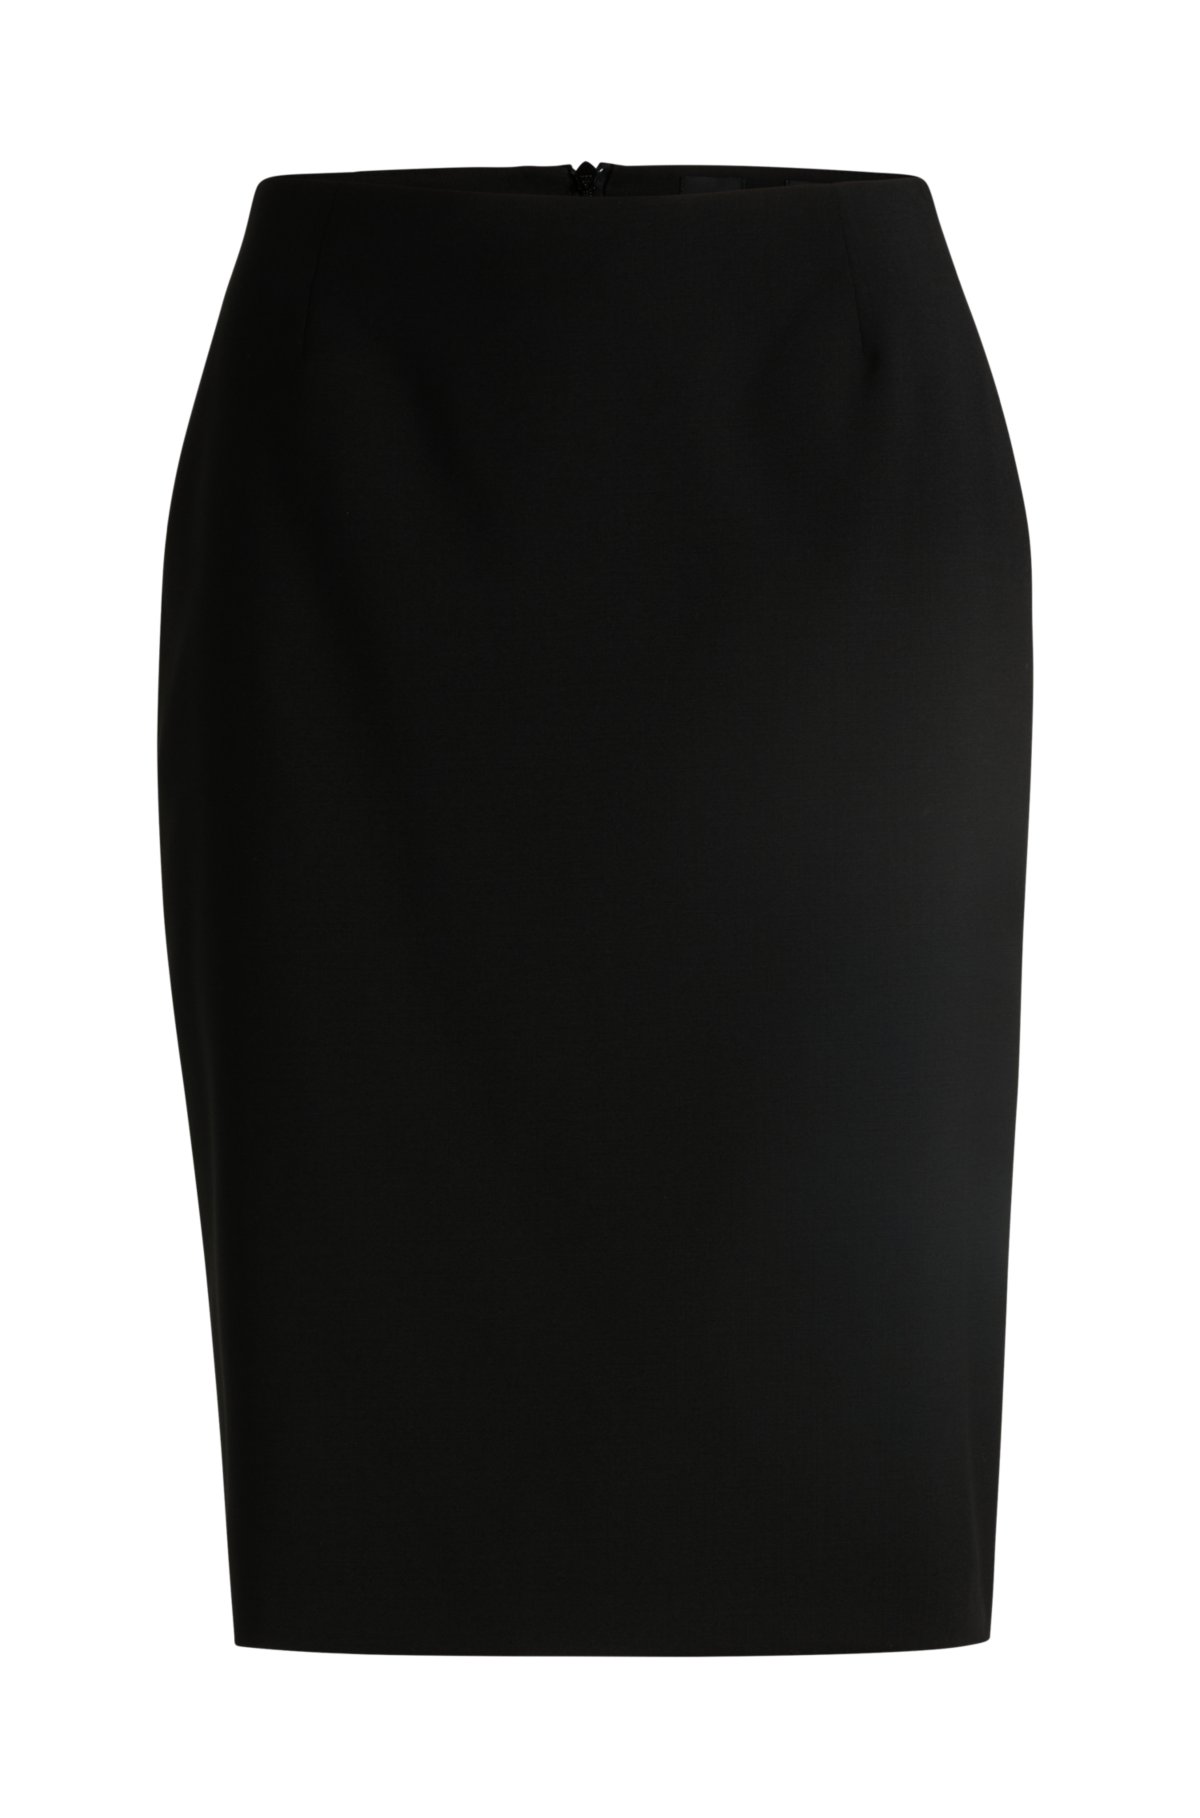 Black Pencil Skirt Stretch 10-12 Tight Fitting Bodycon Sexy Women High  Waist P99